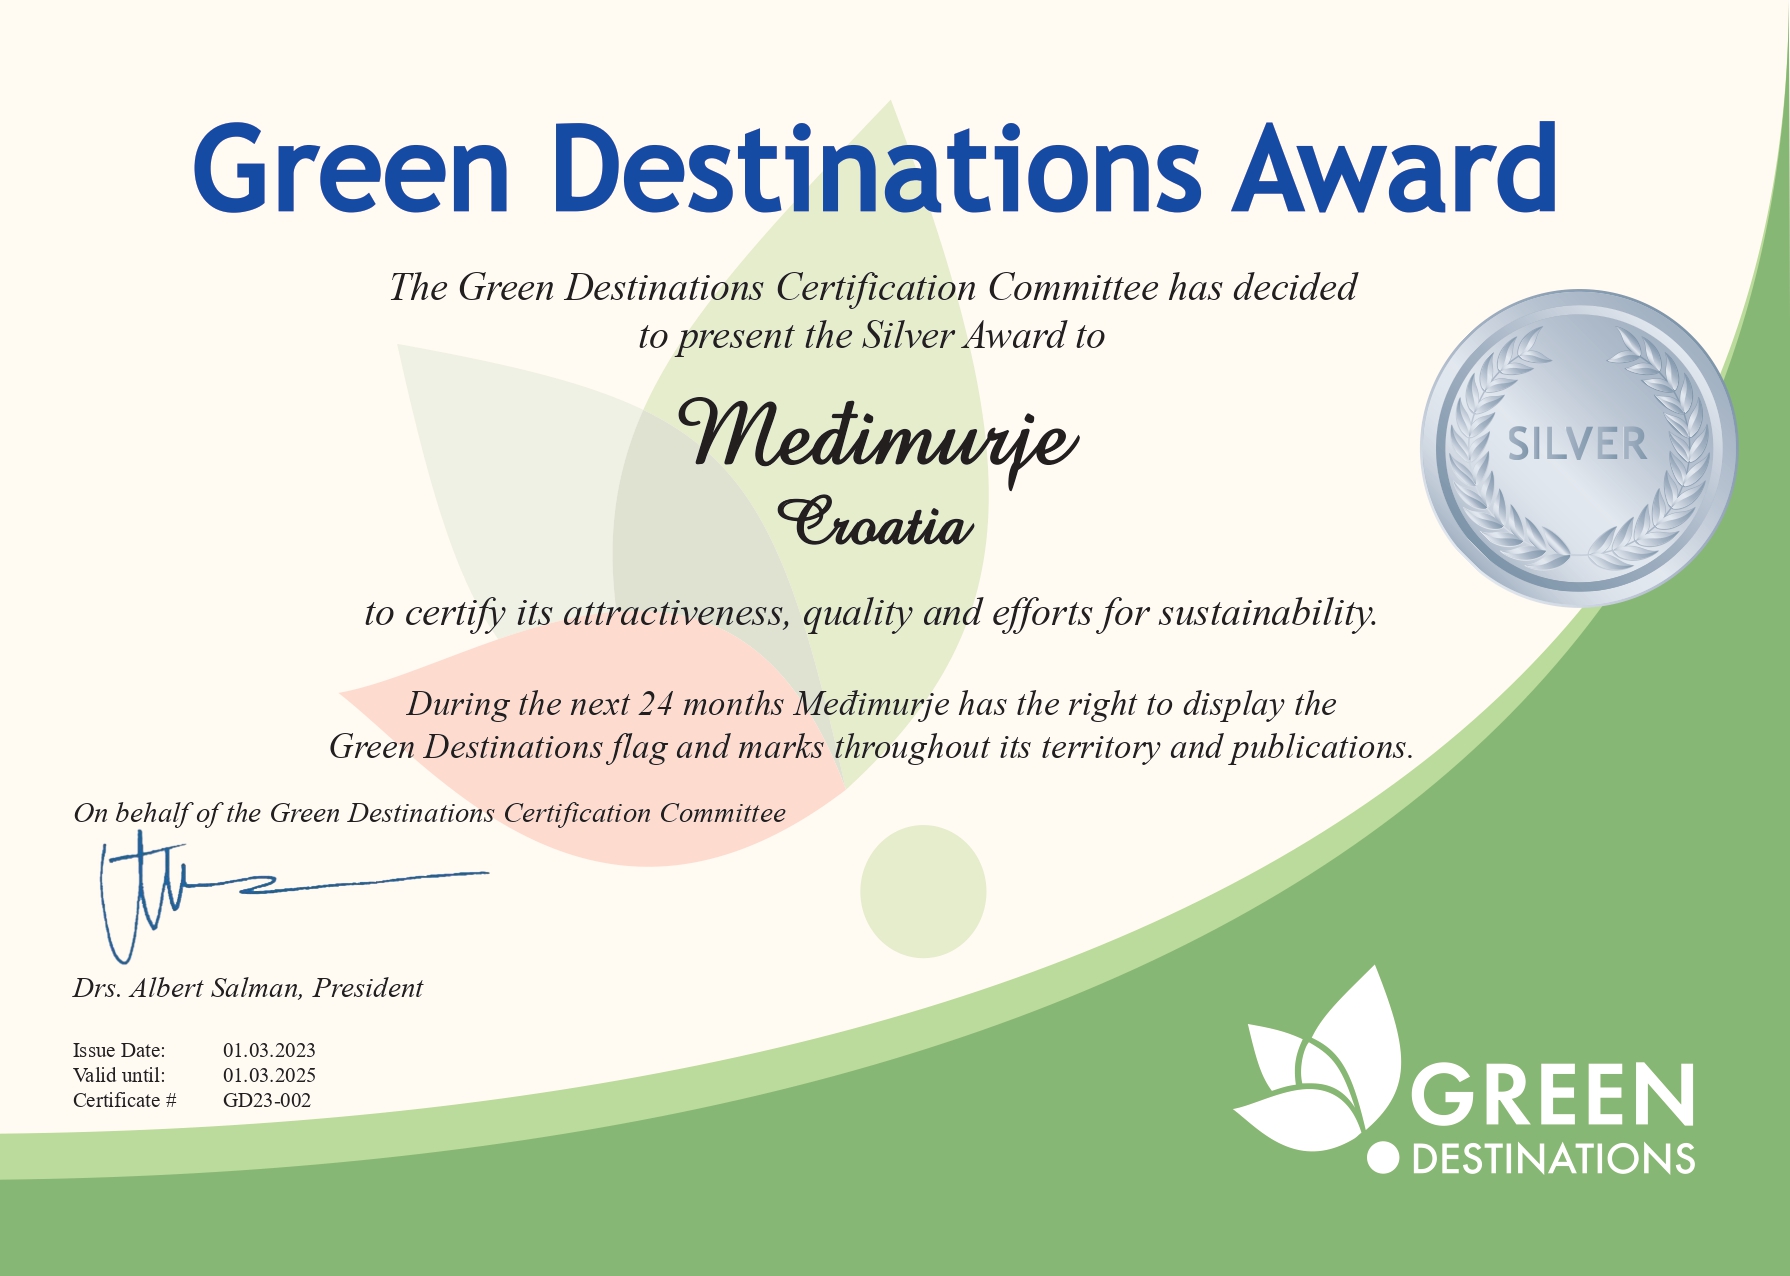 Medimurje is the first region in Croatia with the prestigious green destination 14 1 award